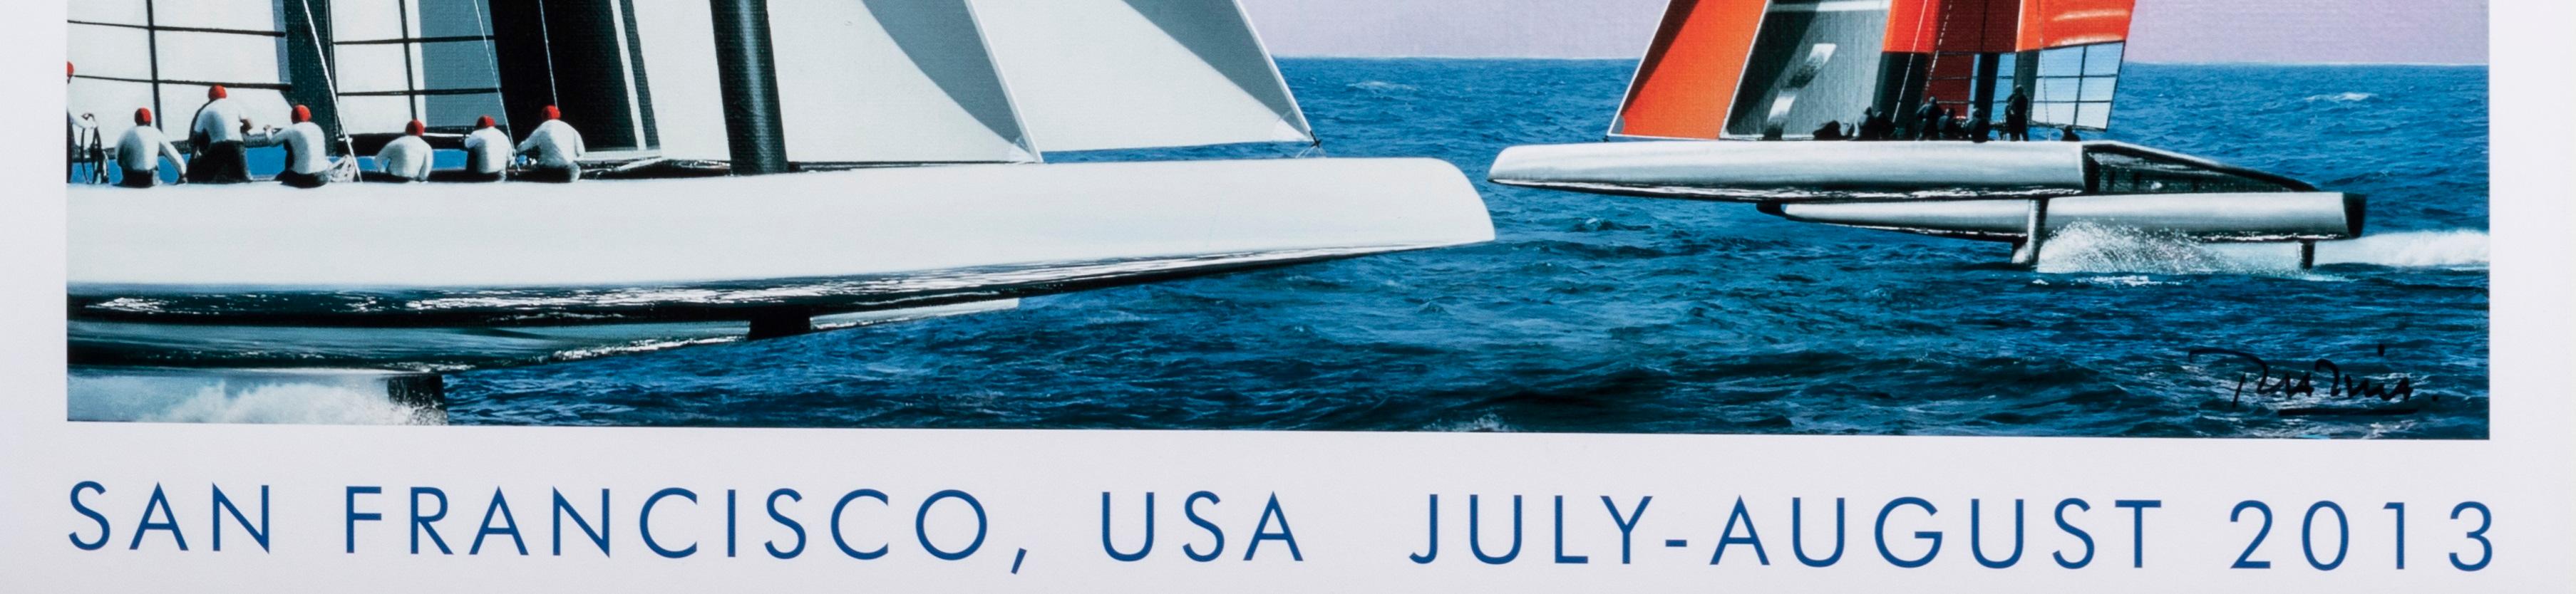 Modern Razzia, Original Louis Vuitton Cup, San Fransisco, Sailing Ship, Boat, 2013 For Sale